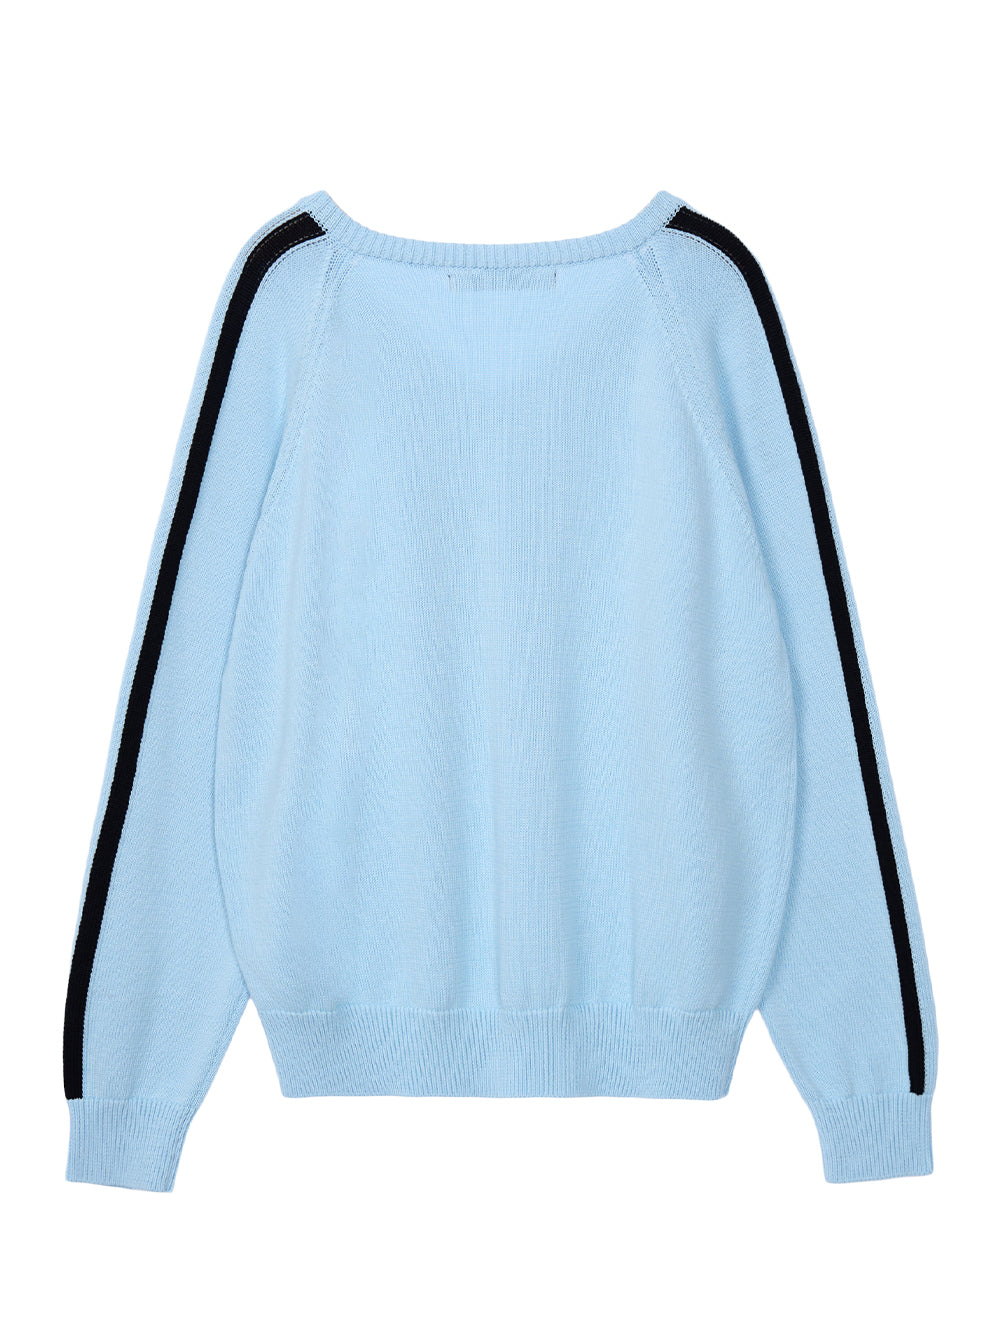 RR V-Neck Sweater (Sky Blue)